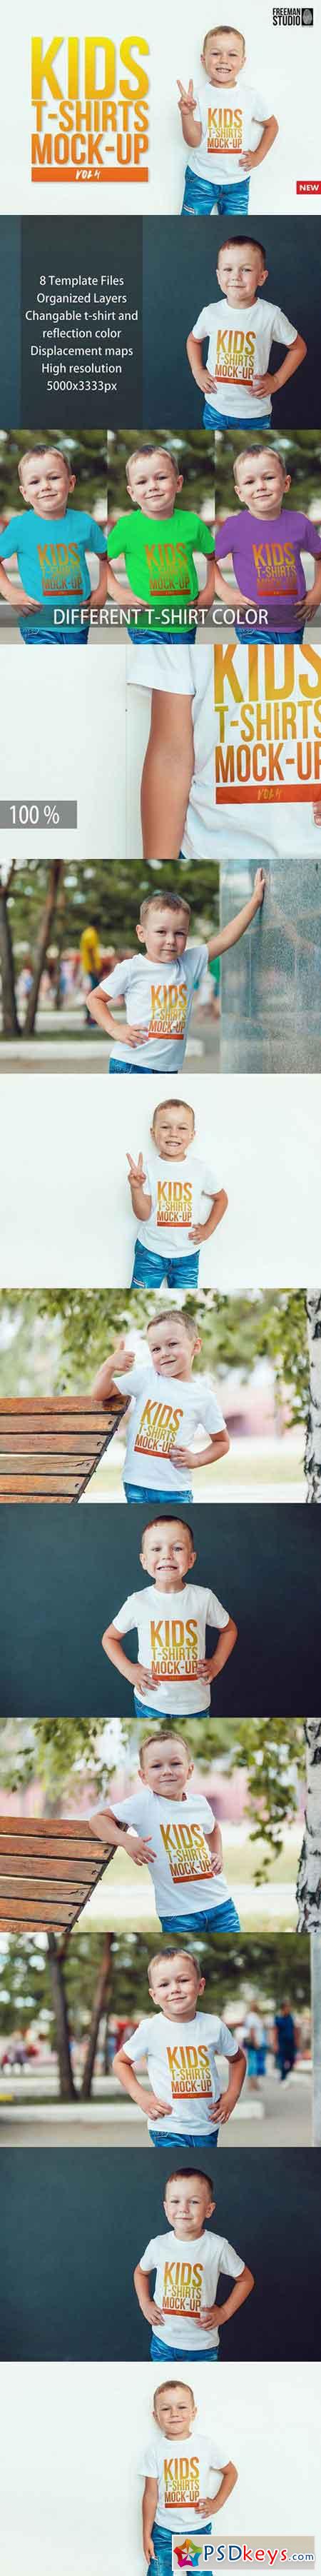 Kids T-Shirt Mock-Up Vol 4 920739